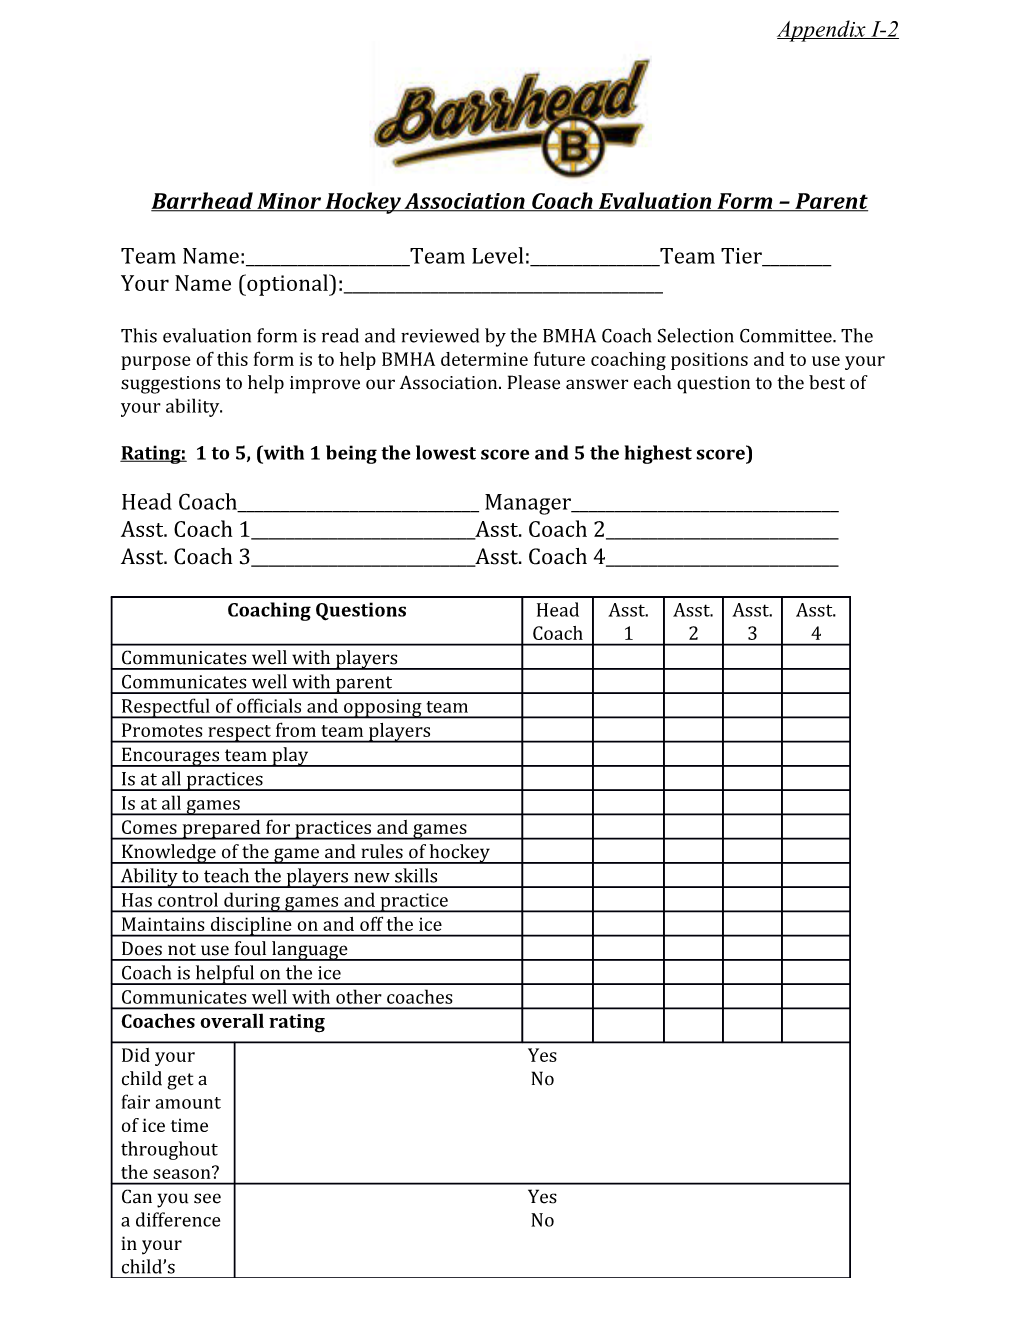 Barrhead Minor Hockey Association Coach Evaluation Form Parent